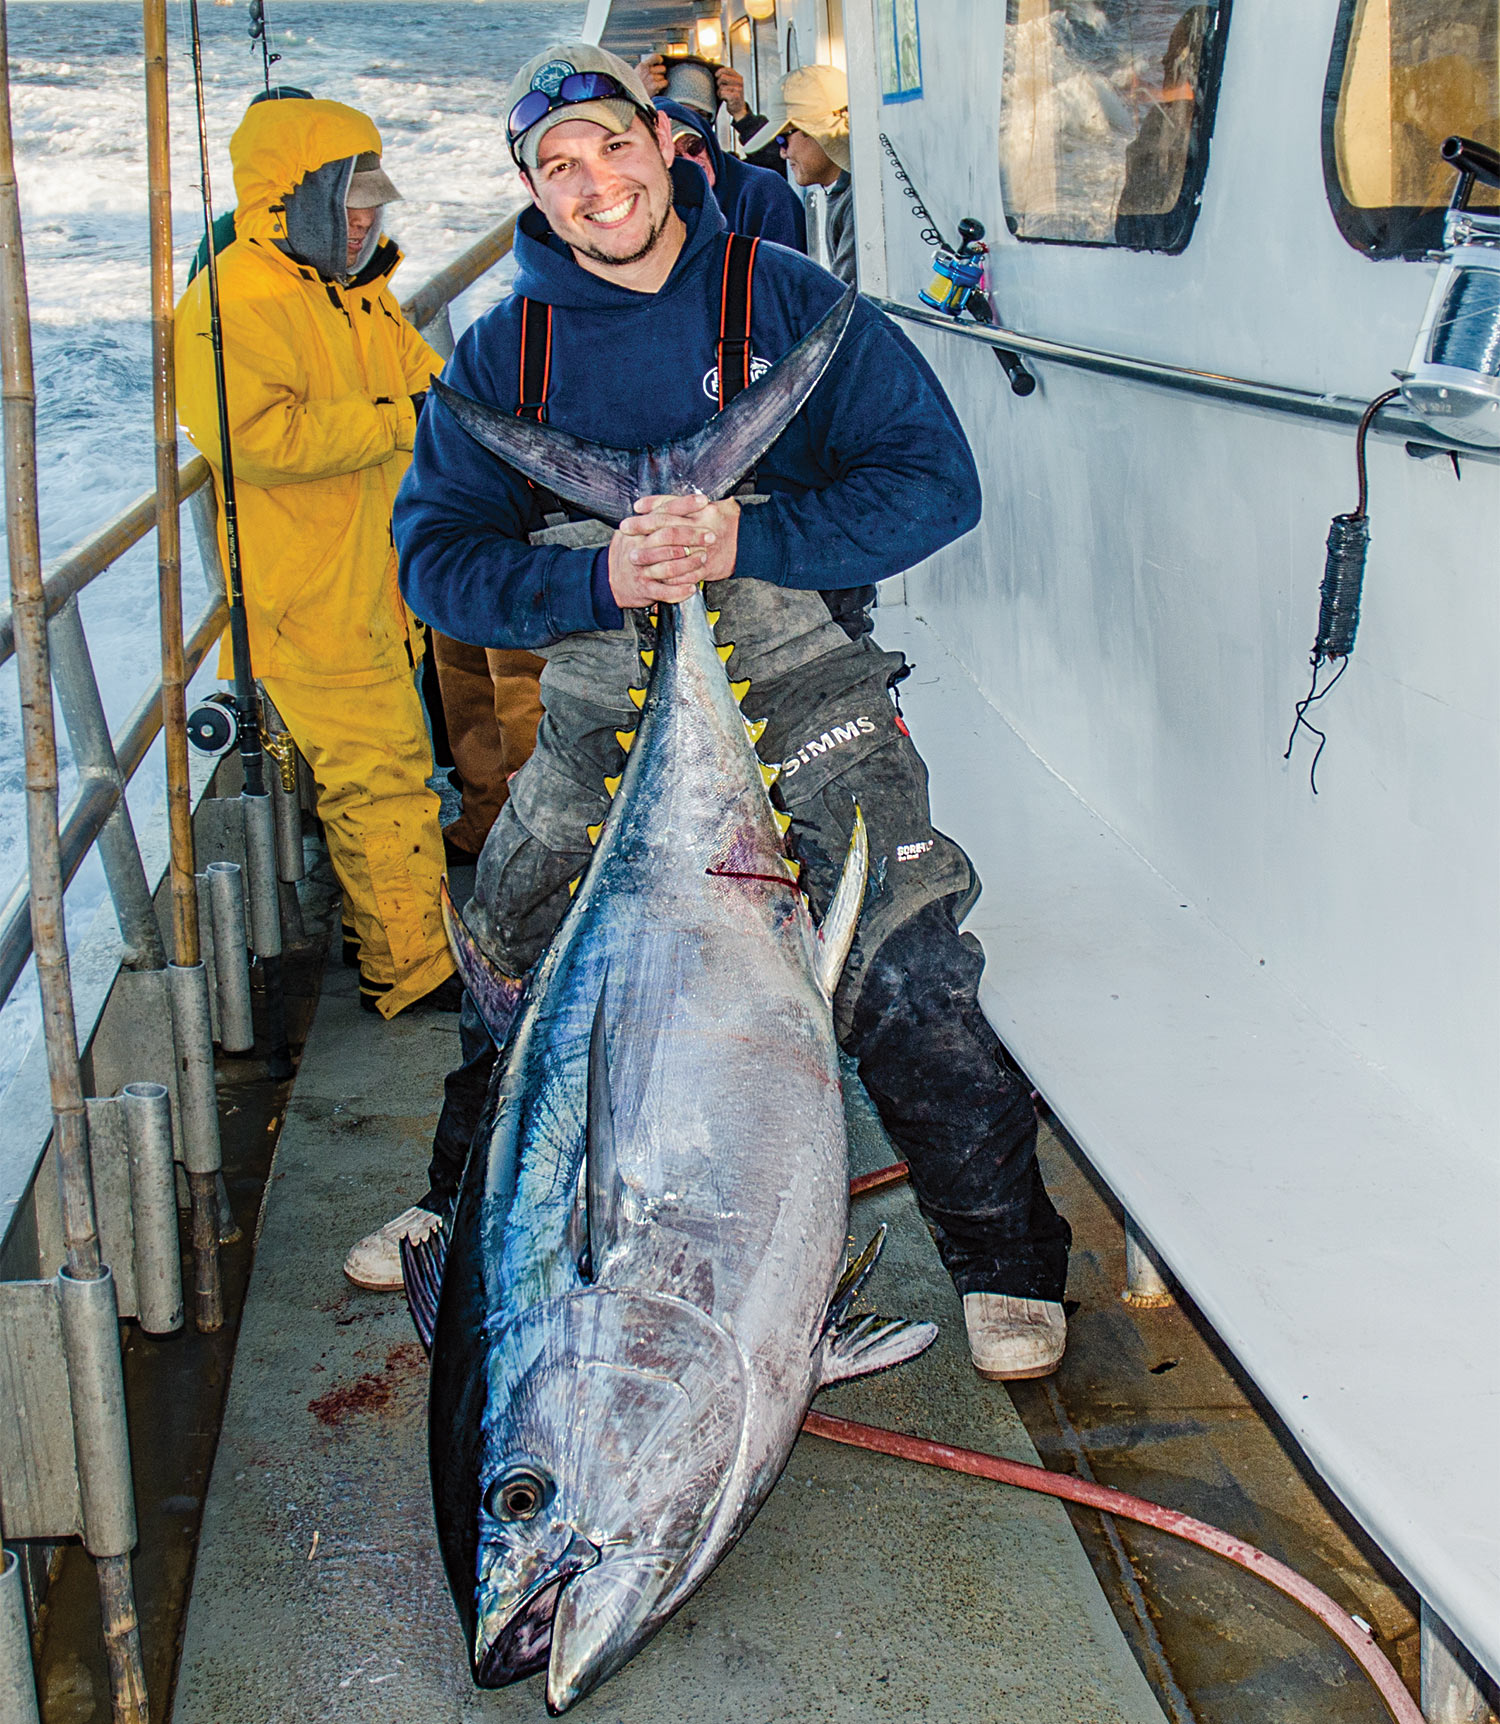 Jimmy Fee holding a giant bigeye tuna on the deck of a boat